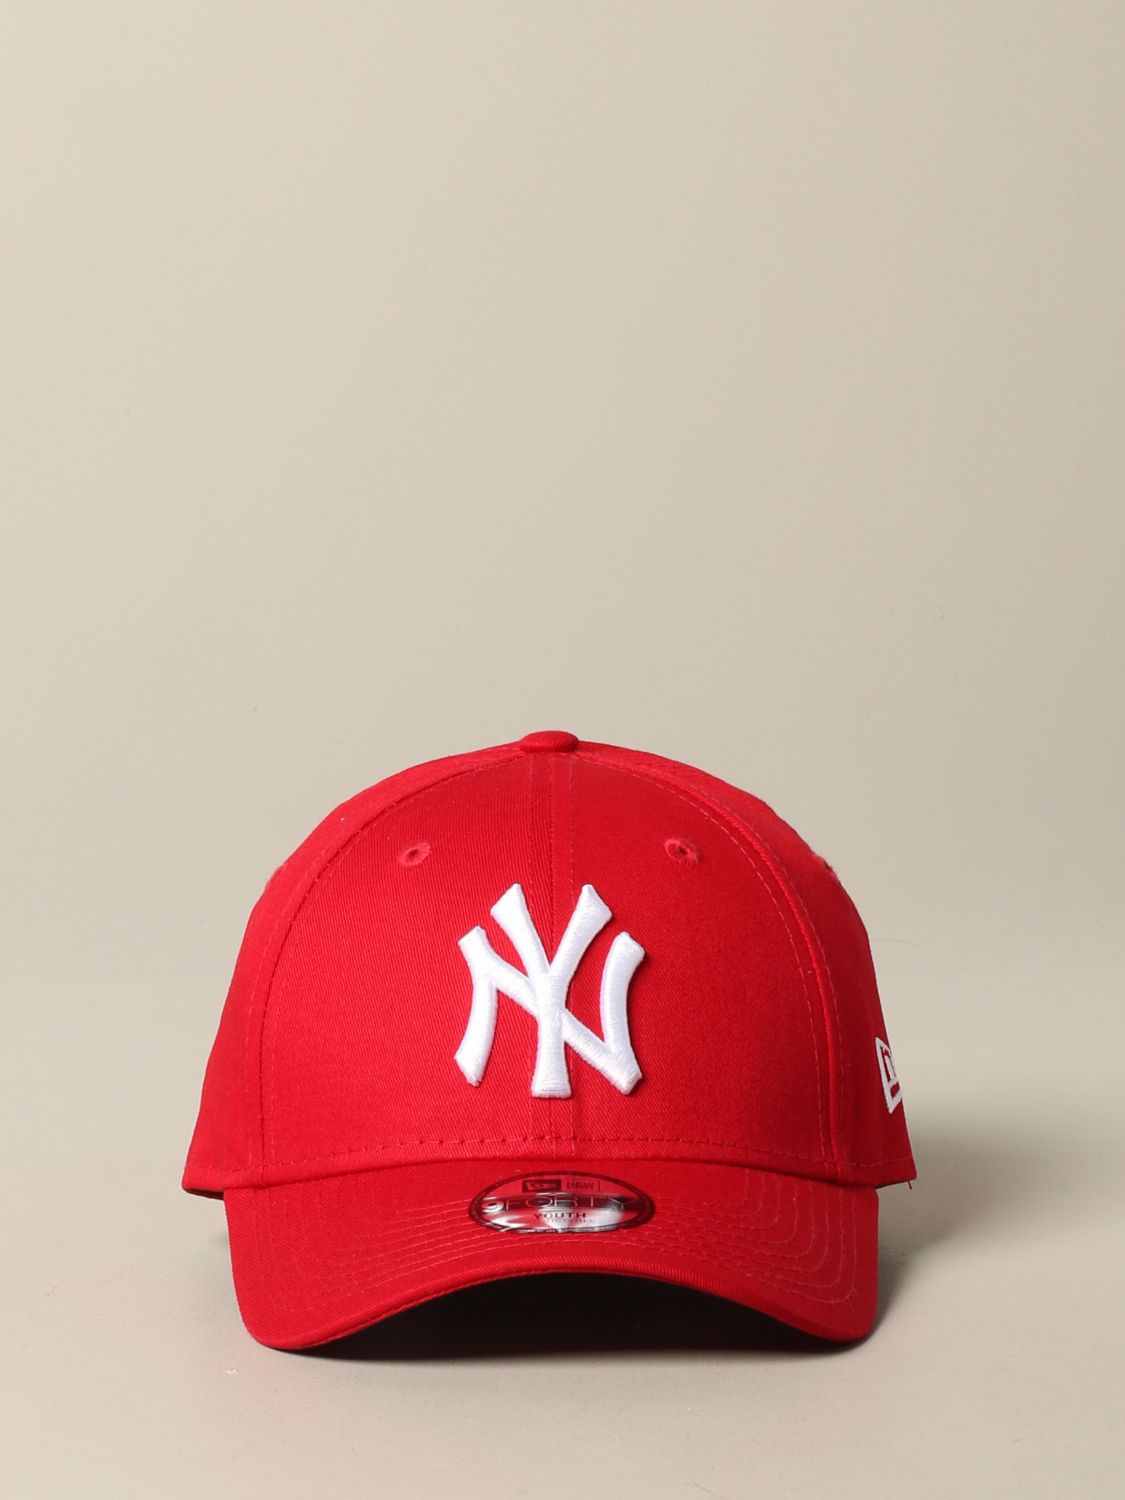 New Era Outlet: basic hat with NY Yankees logo - Red | New Era hat ...